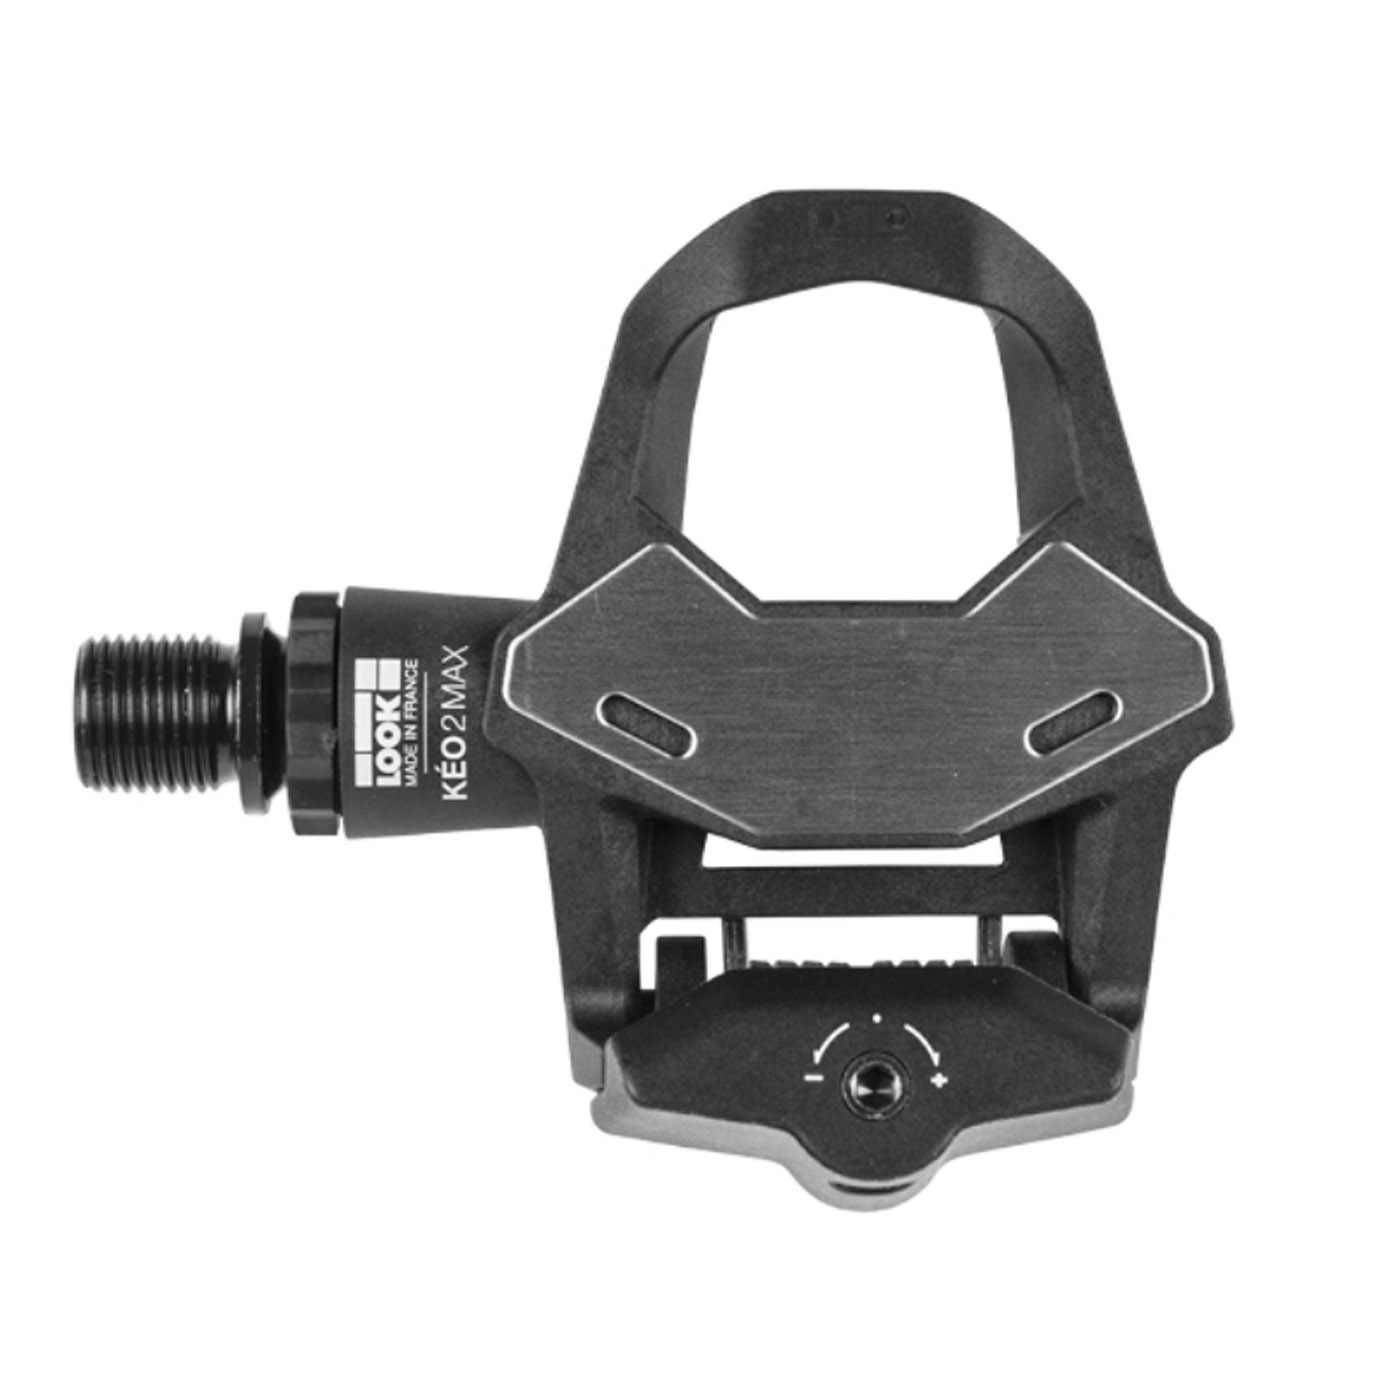 Pedal LOOK Ruta KEO 2 MAX Contacto Composite/CrMo Negro + Placas (00016079)